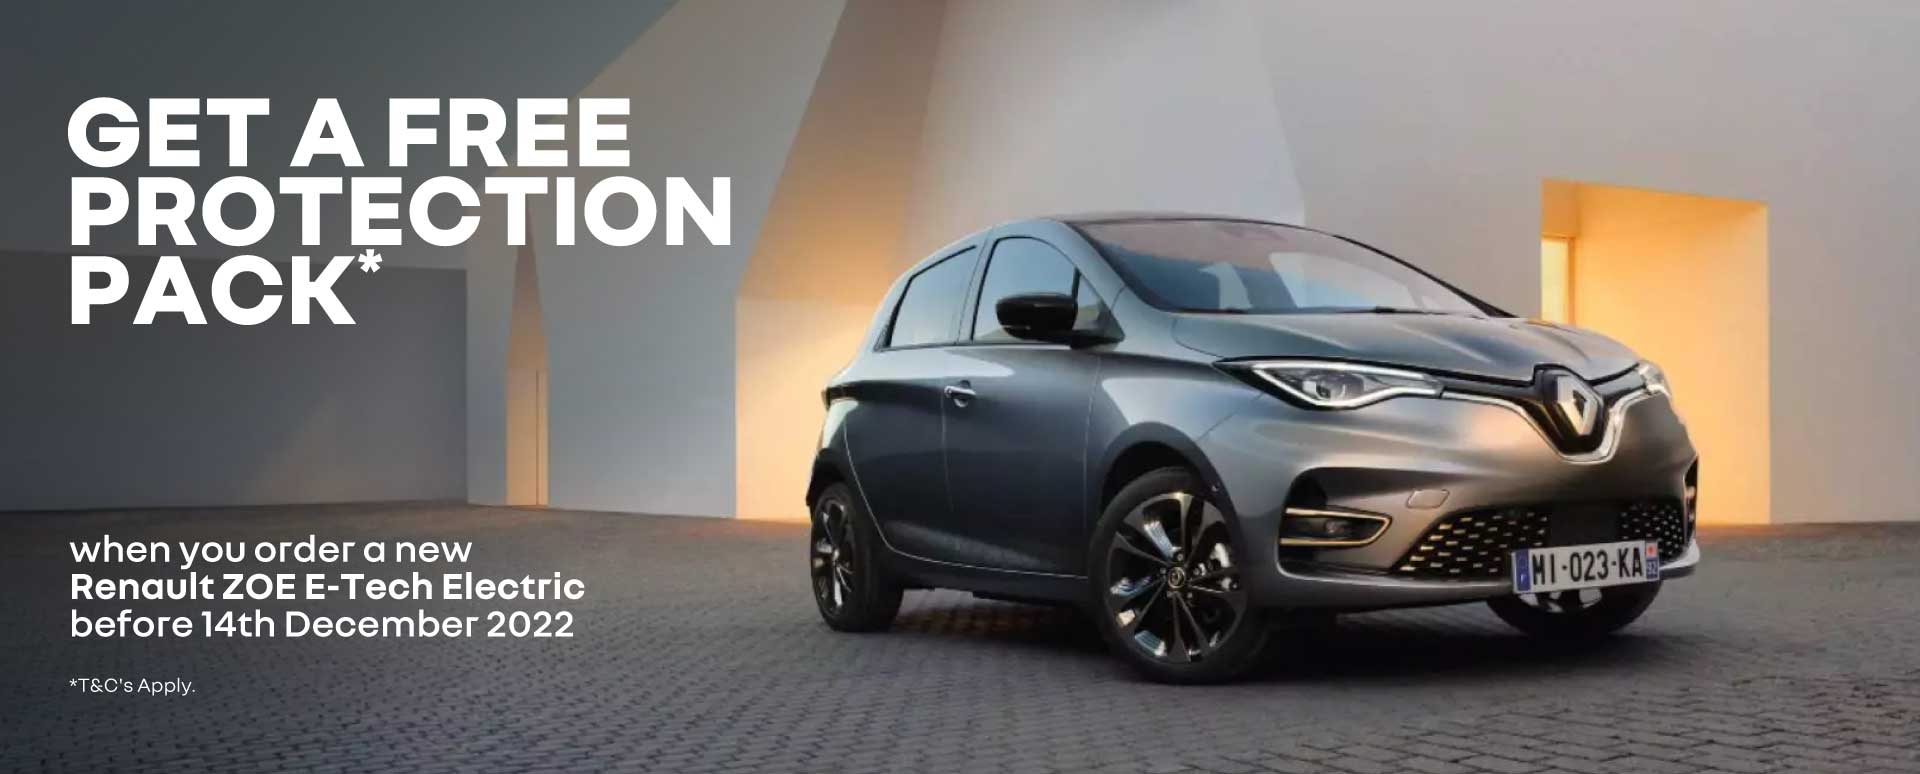 Renault ZOE Promotion